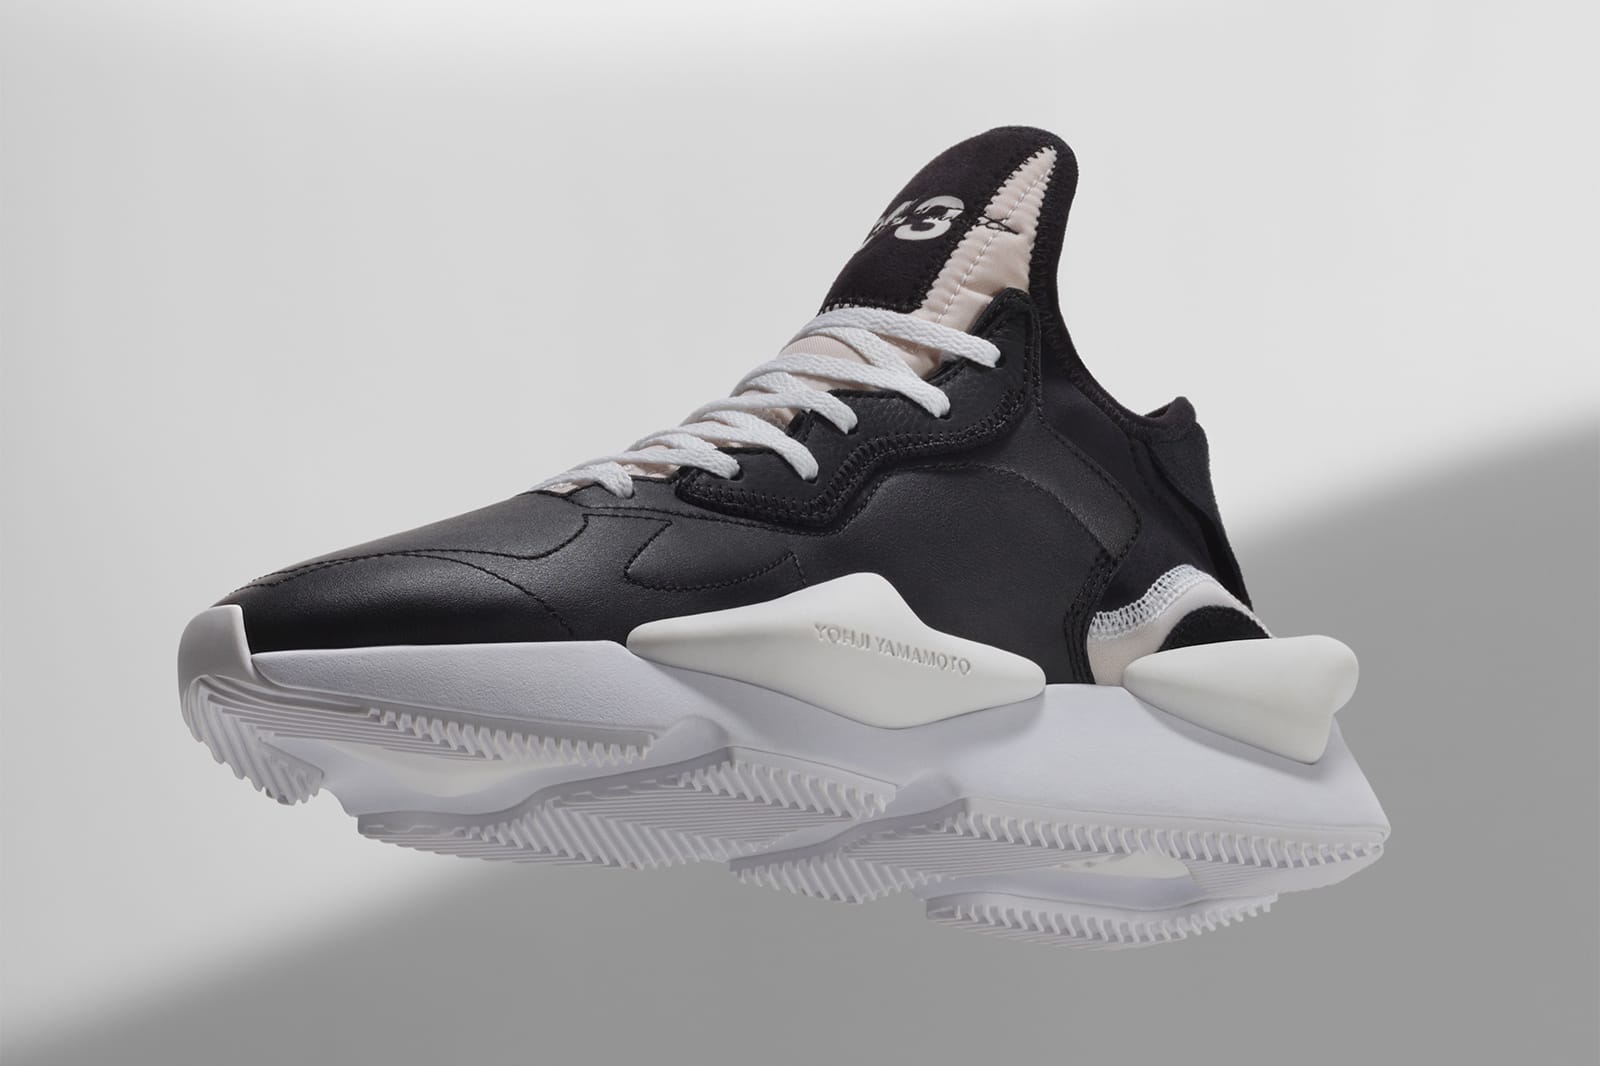 adidas Y-3 Kaiwa Sneaker Release Date 